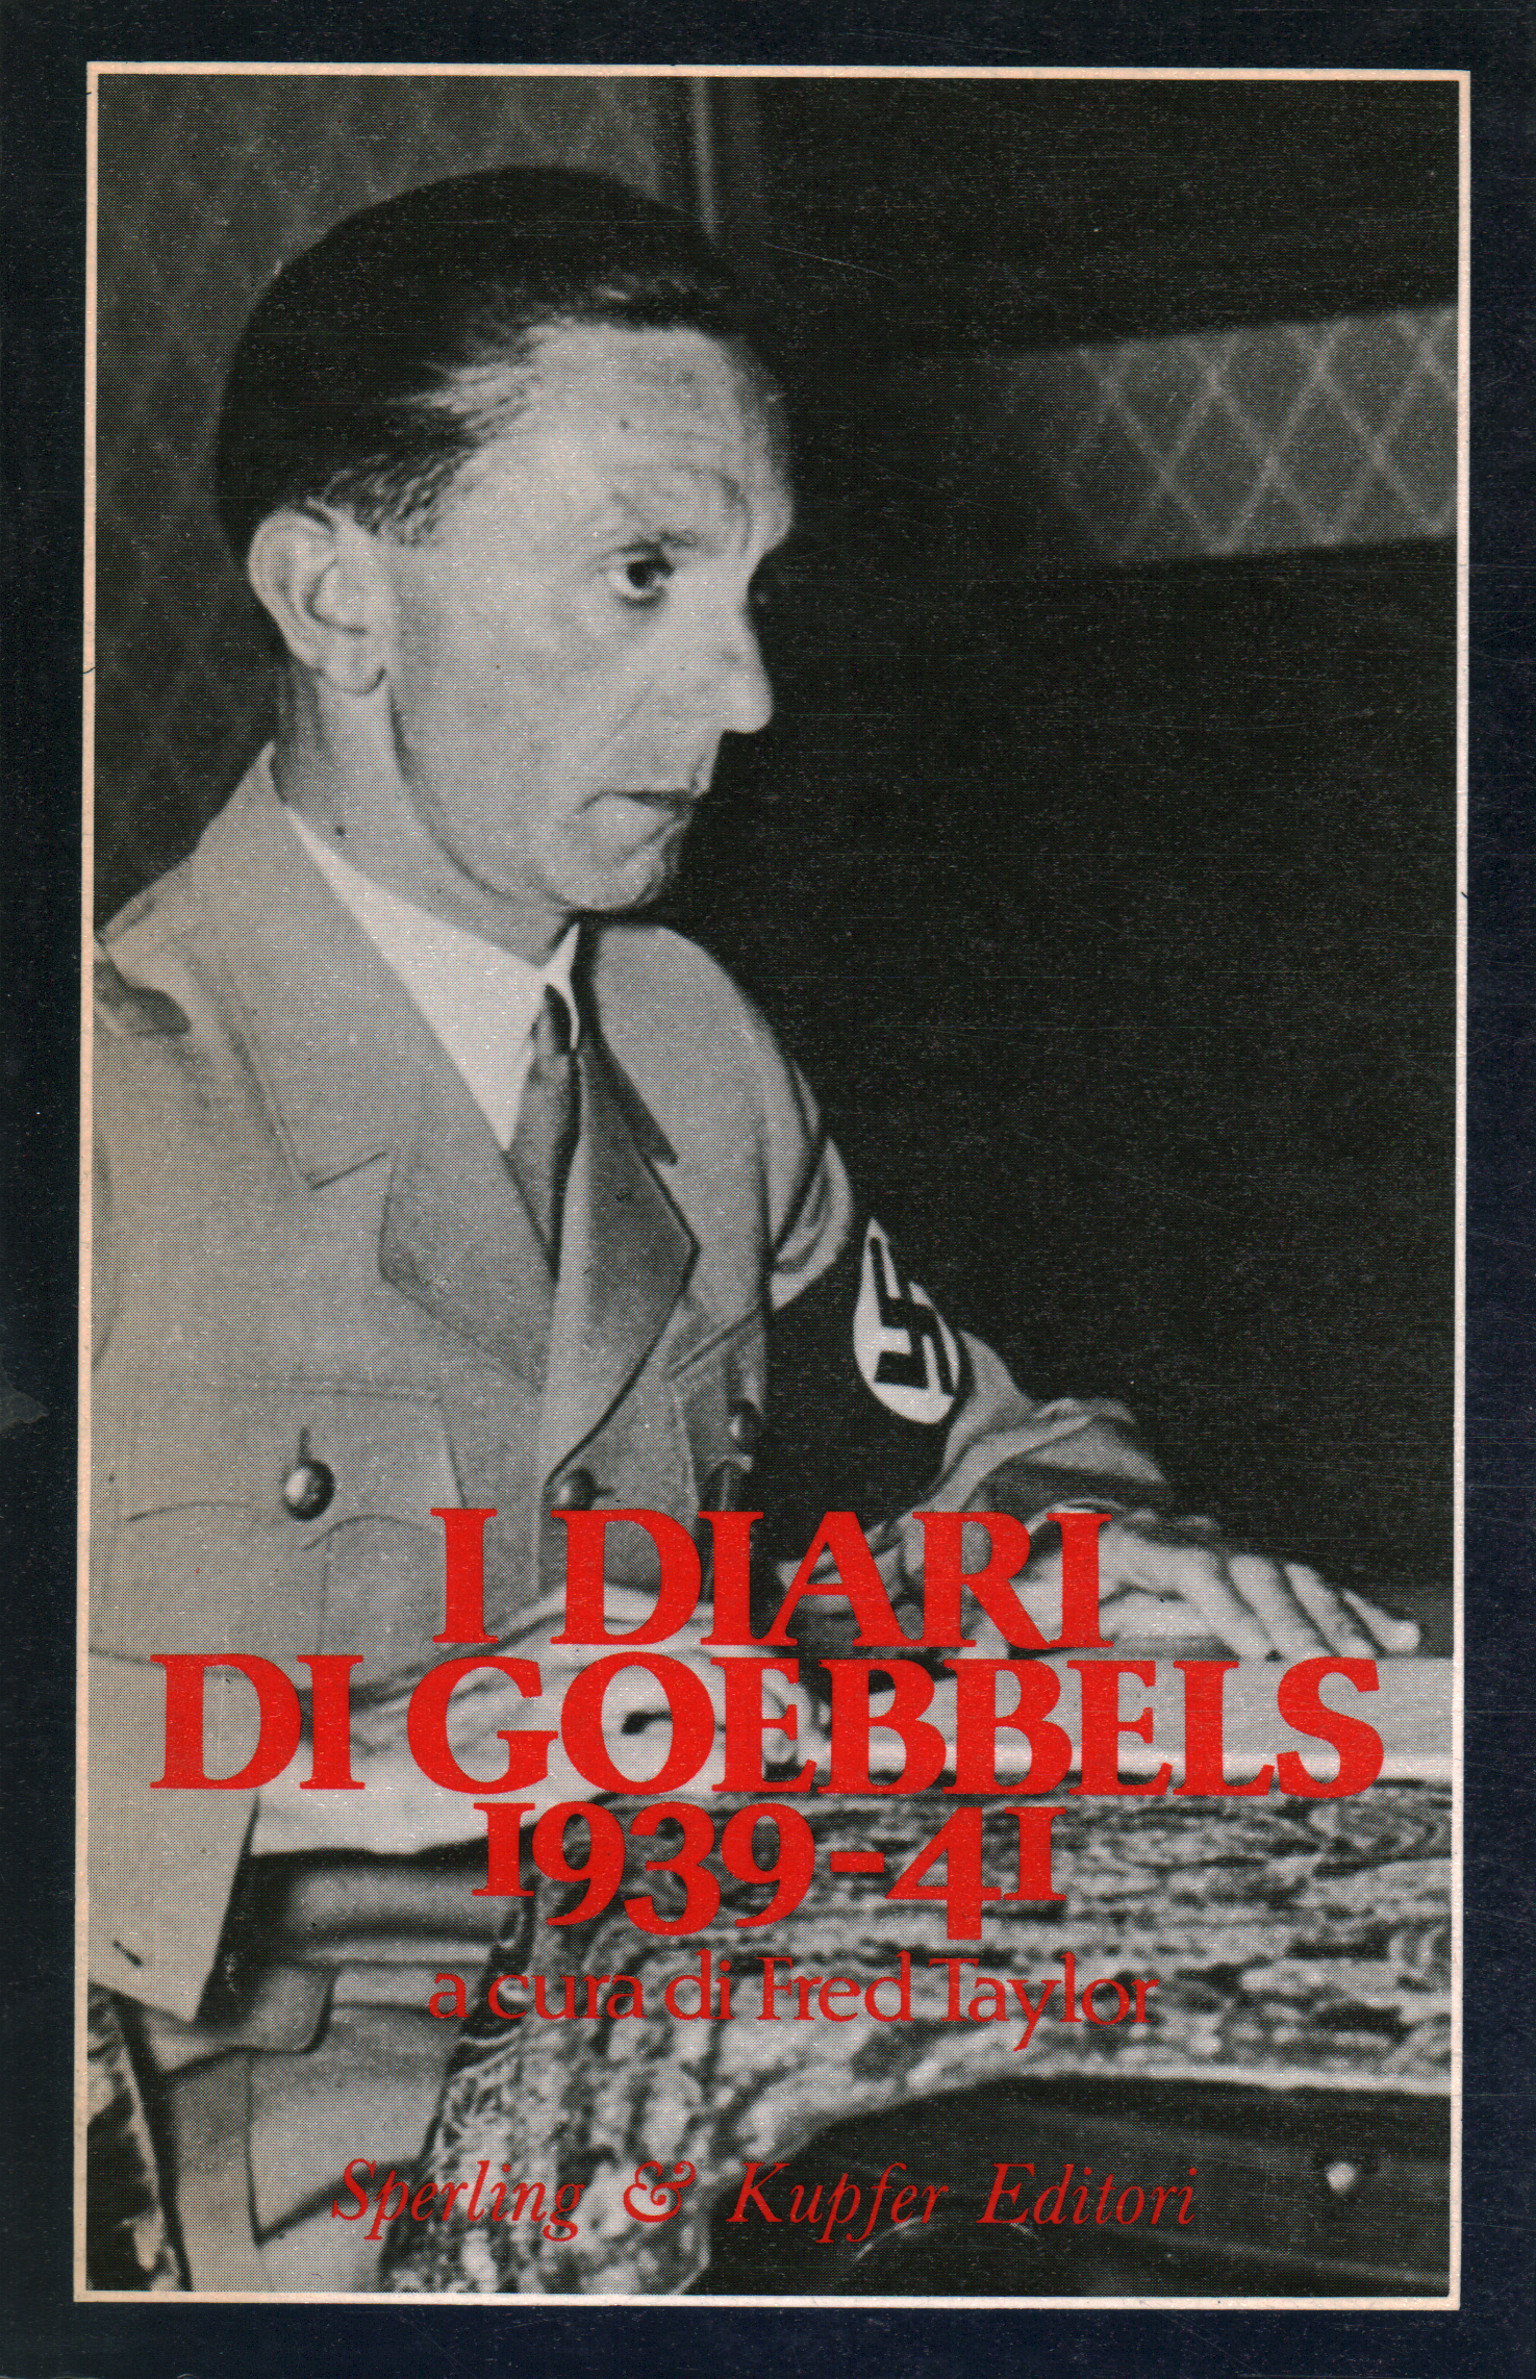 Die Goebbels-Tagebücher 1939-41